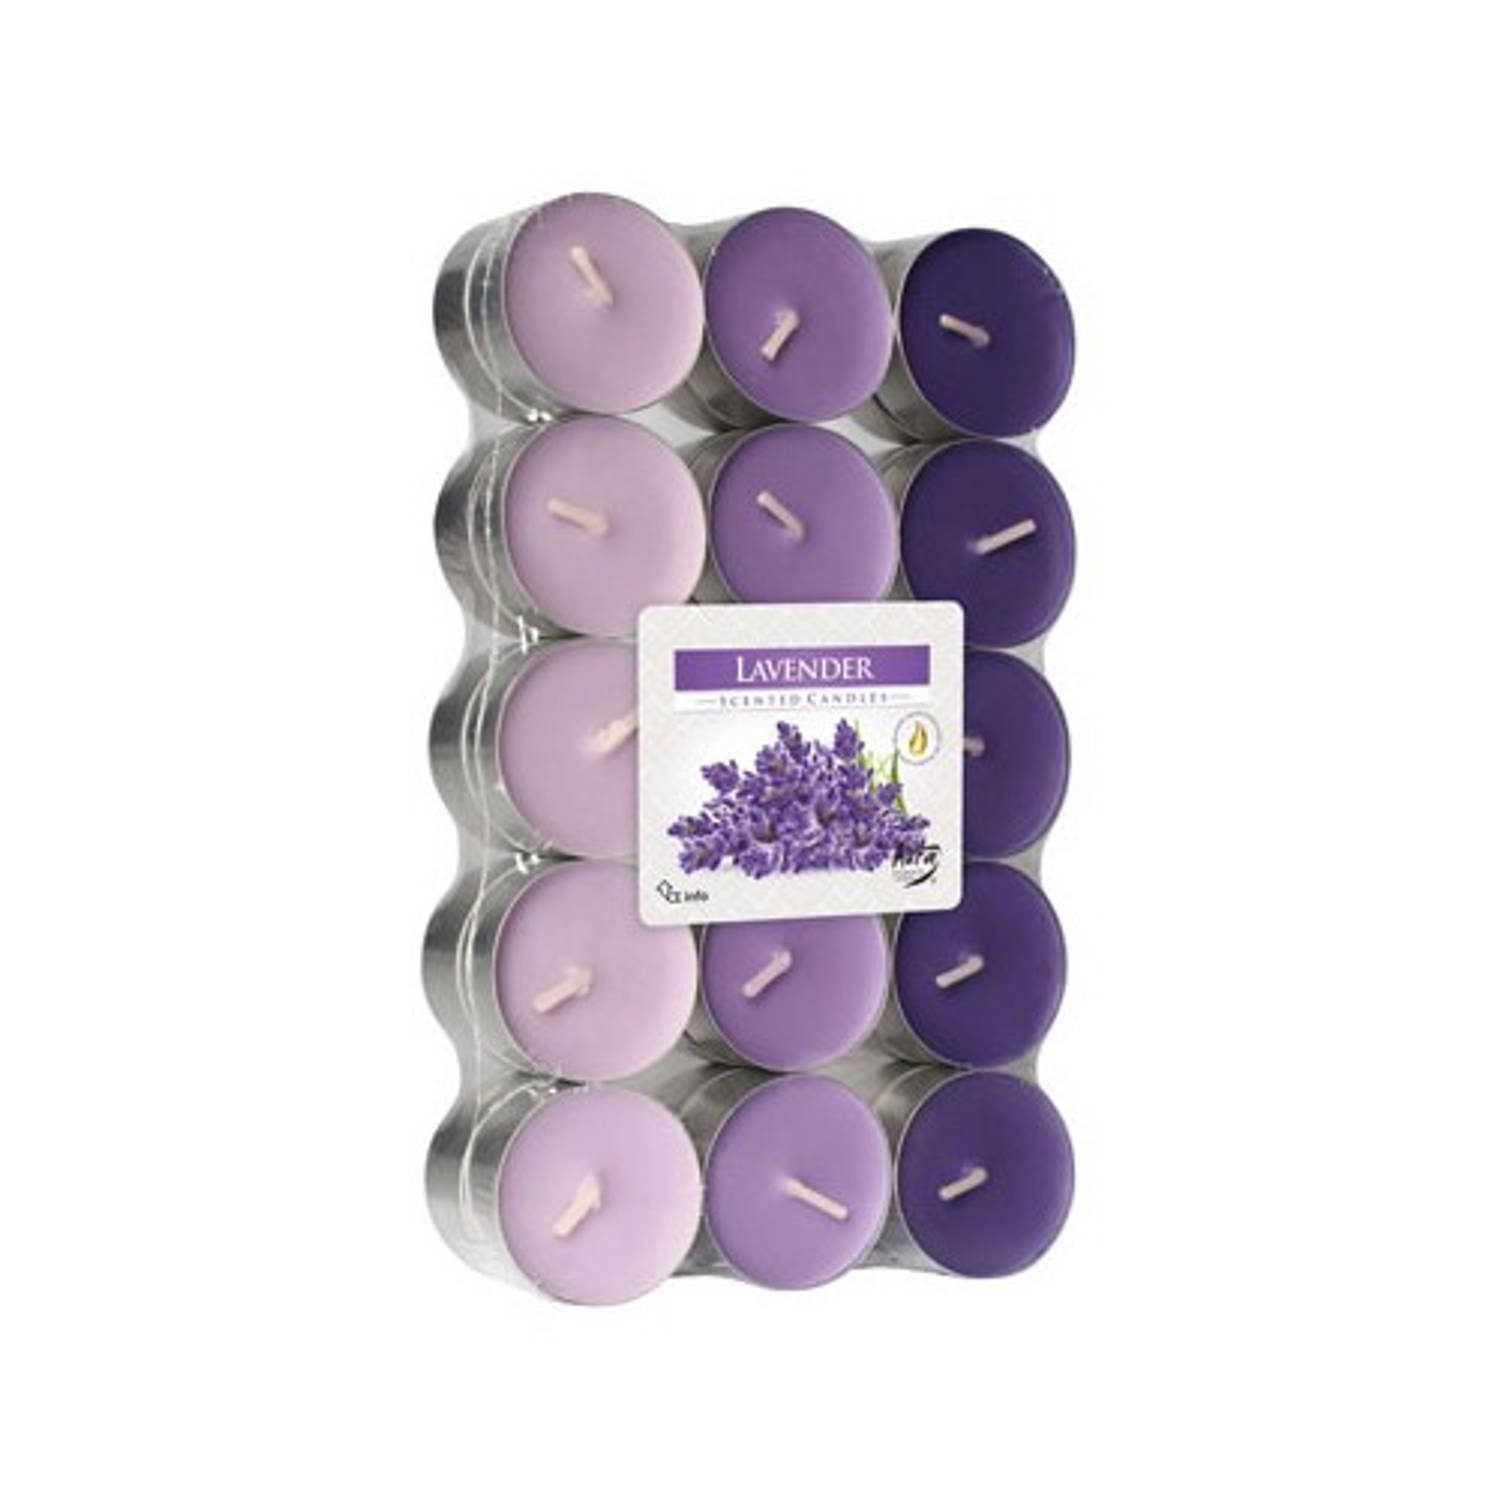 Theelichtjes lavendel geur (30 stuks)